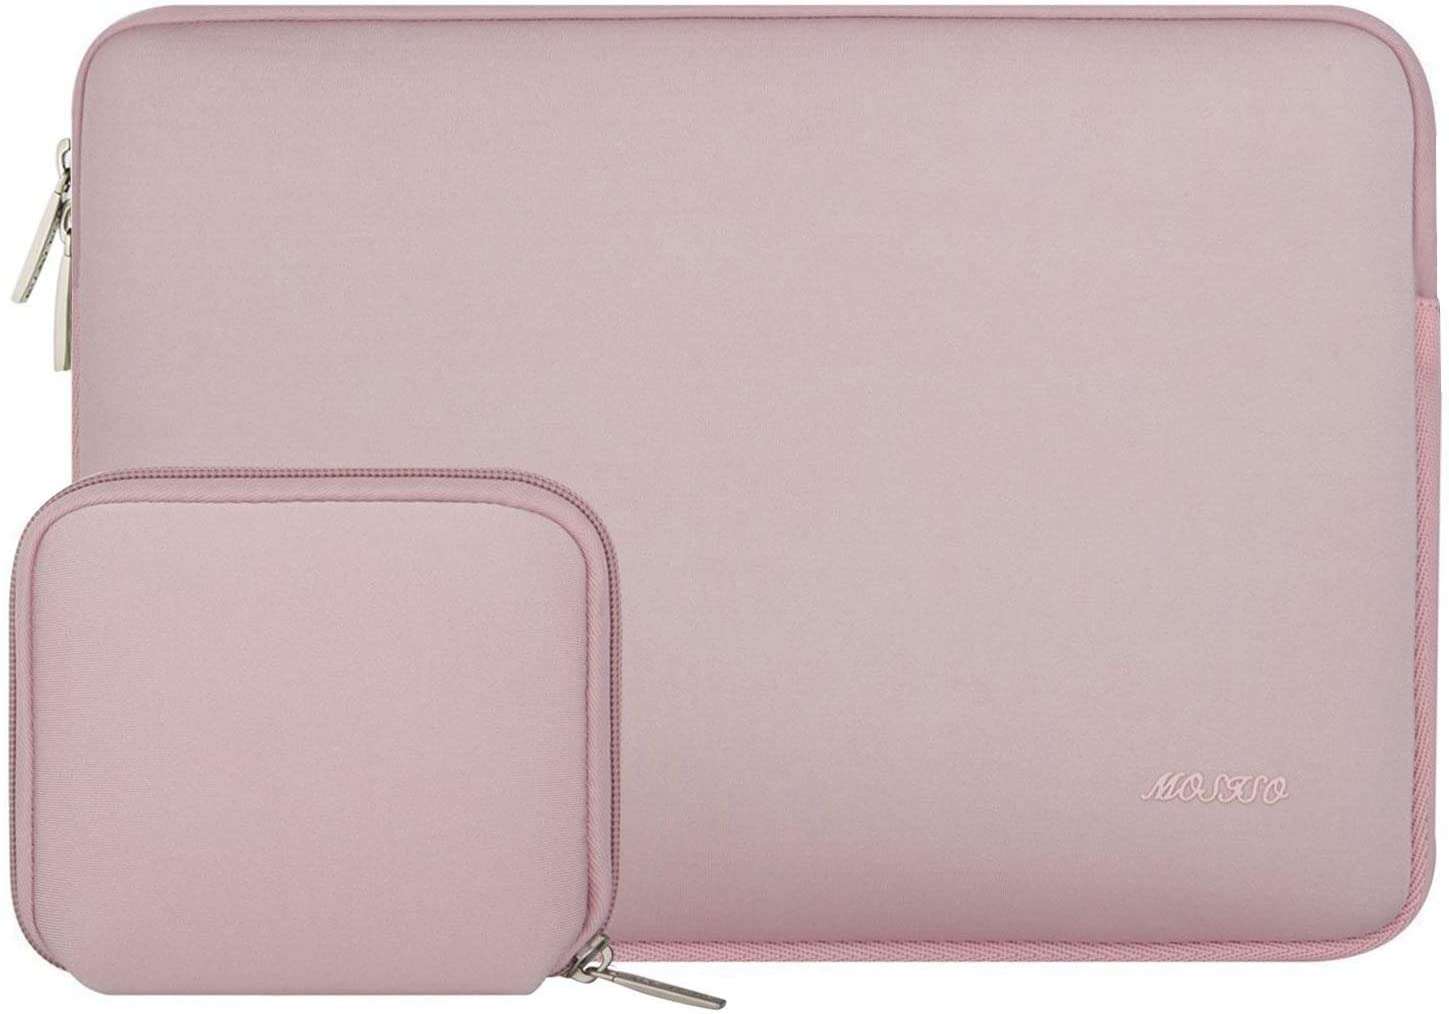 iPhone 14 Pro case pink shiny alligator - Maison Jean Rousseau